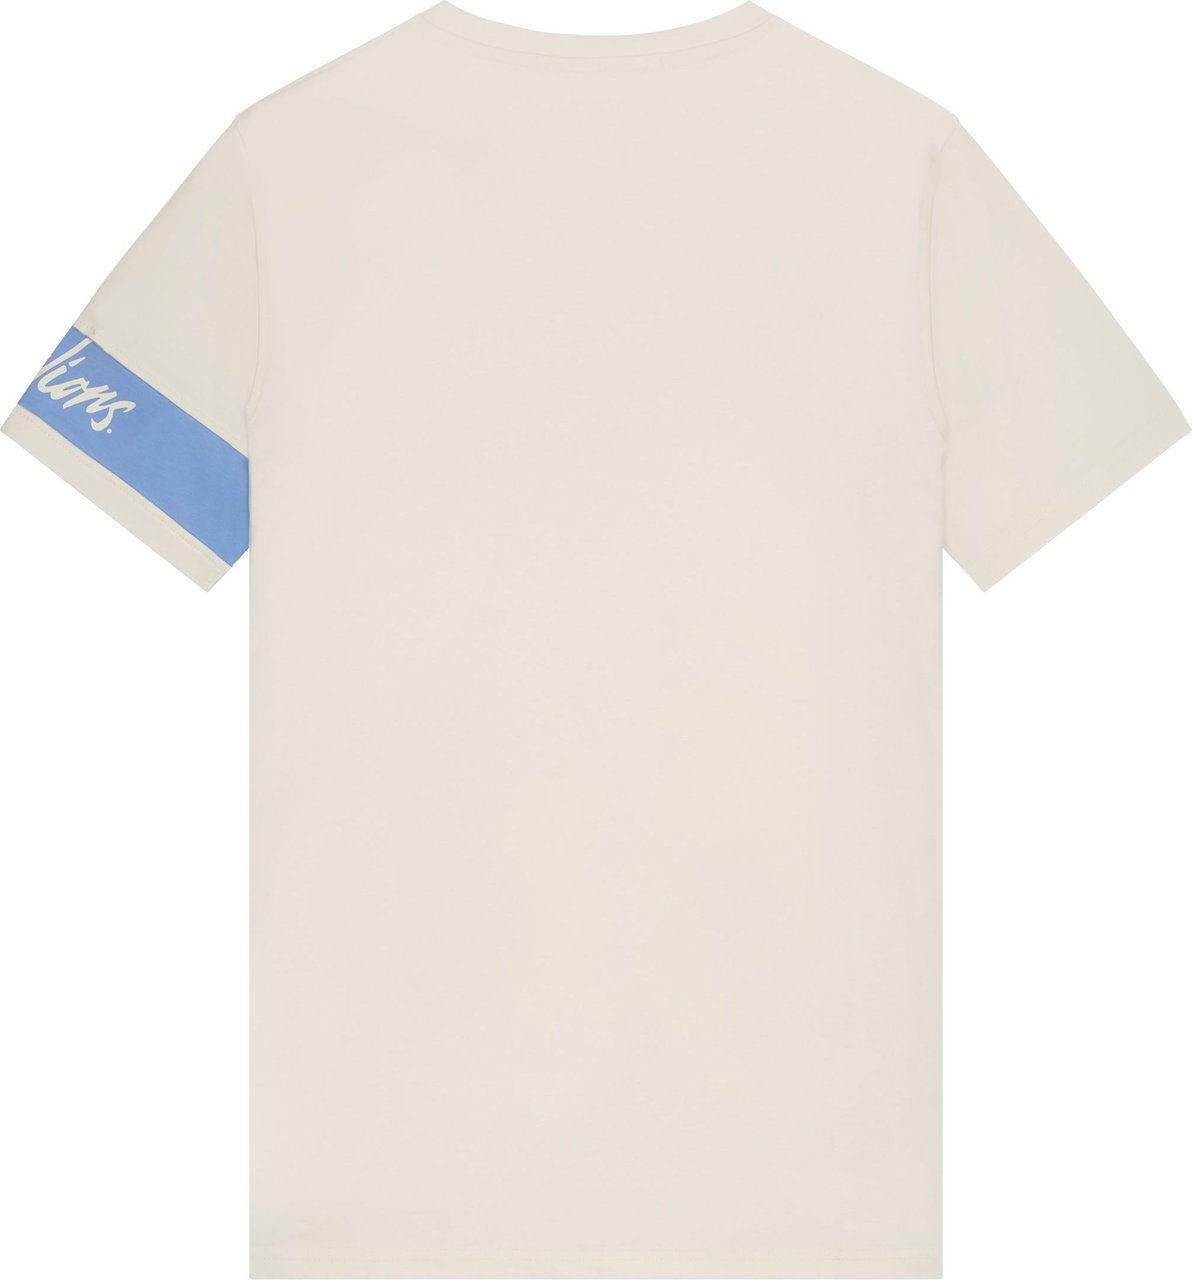 Malelions Captain T-Shirt - Off-White/Blue Wit